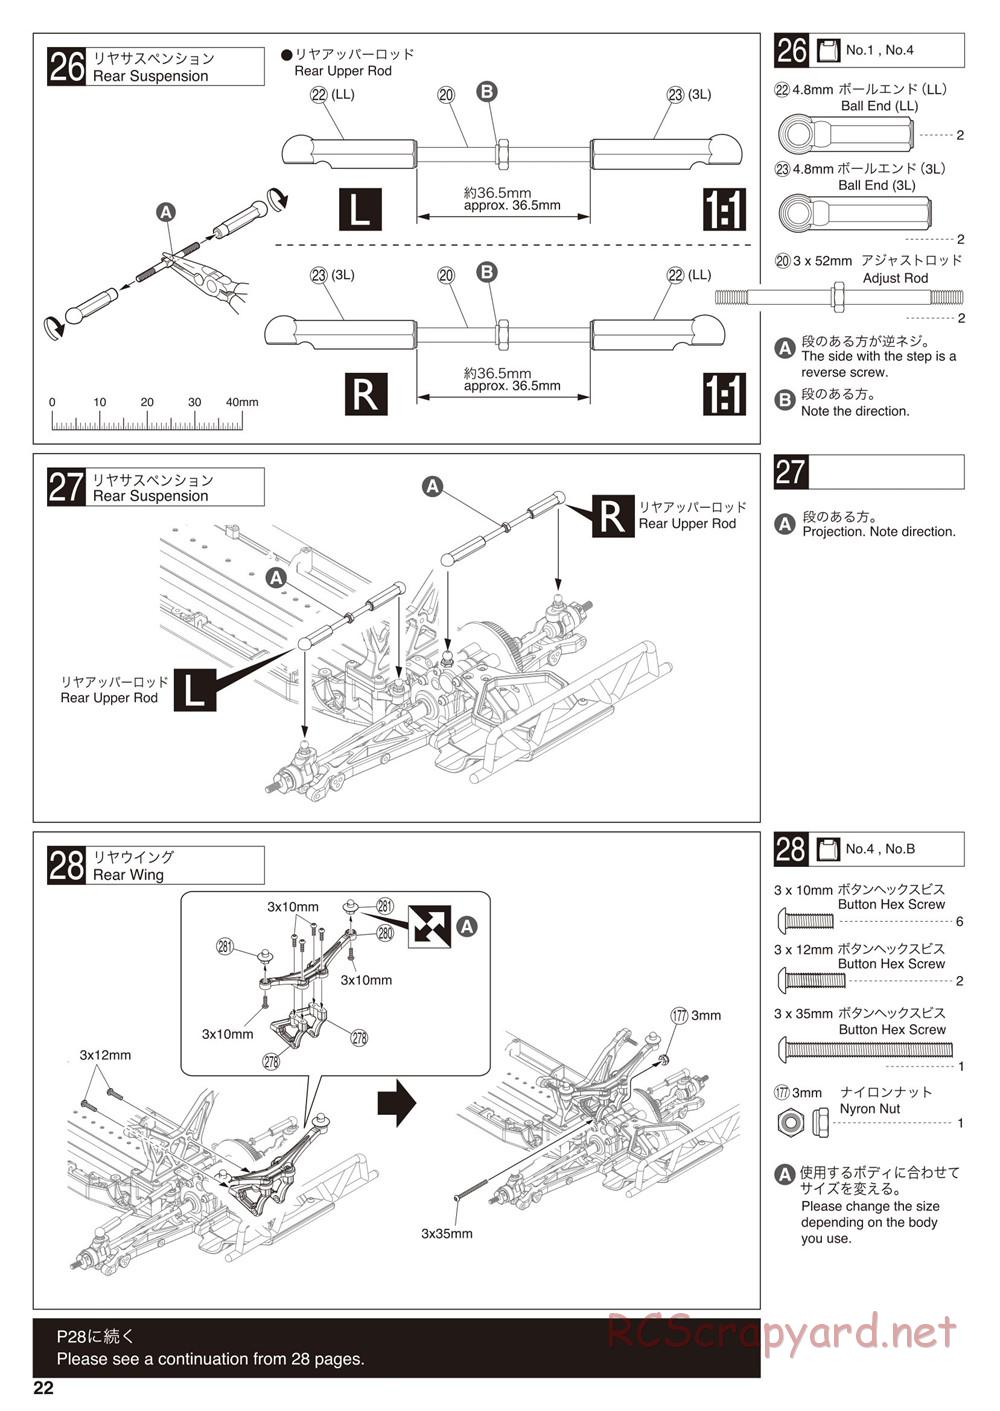 Kyosho - Ultima SC6 - Manual - Page 22